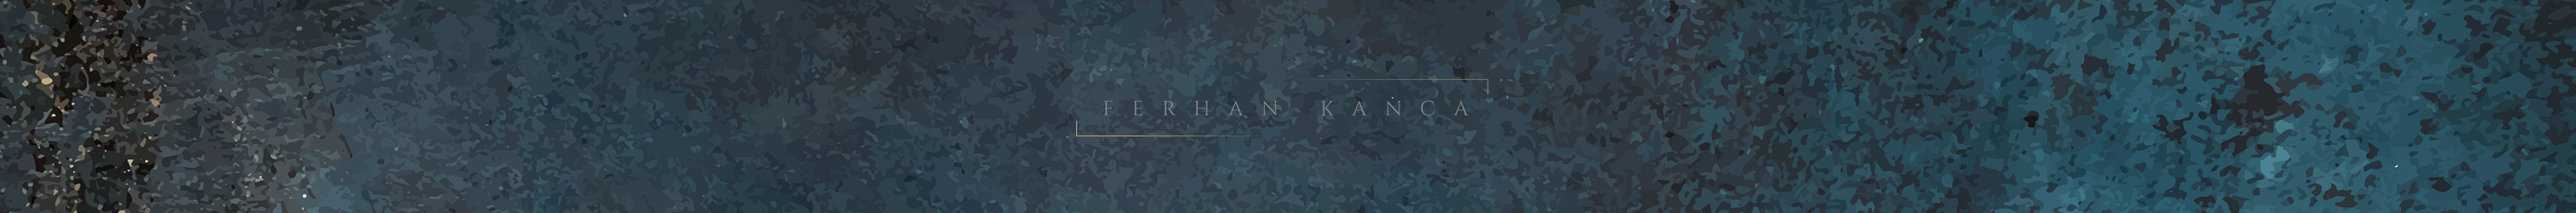 Ferhan Kanca's profile banner